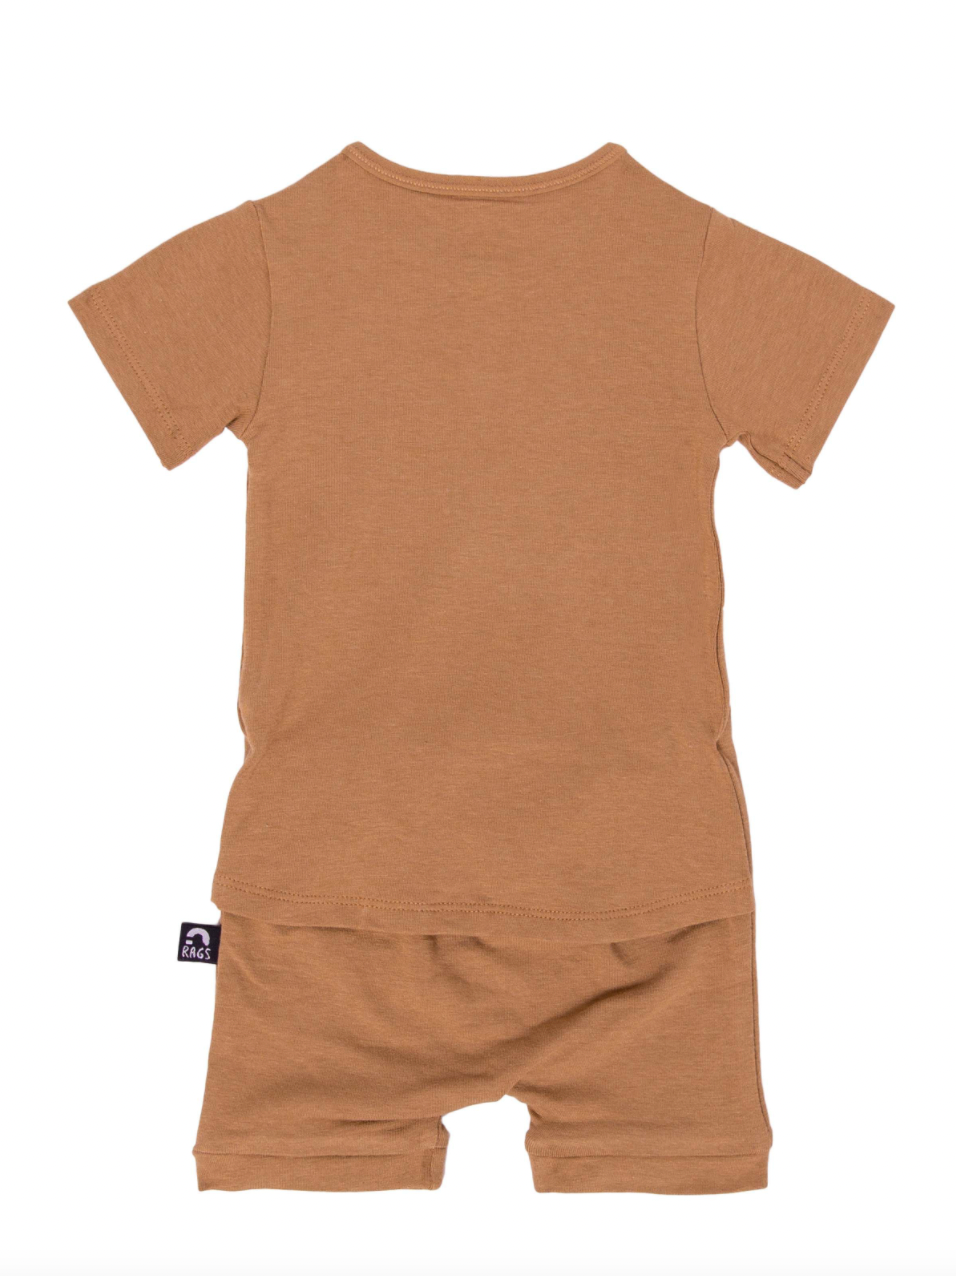 Rags - Essentials Infant Peekabooty Short Sleeve Shorts Romper in Camel